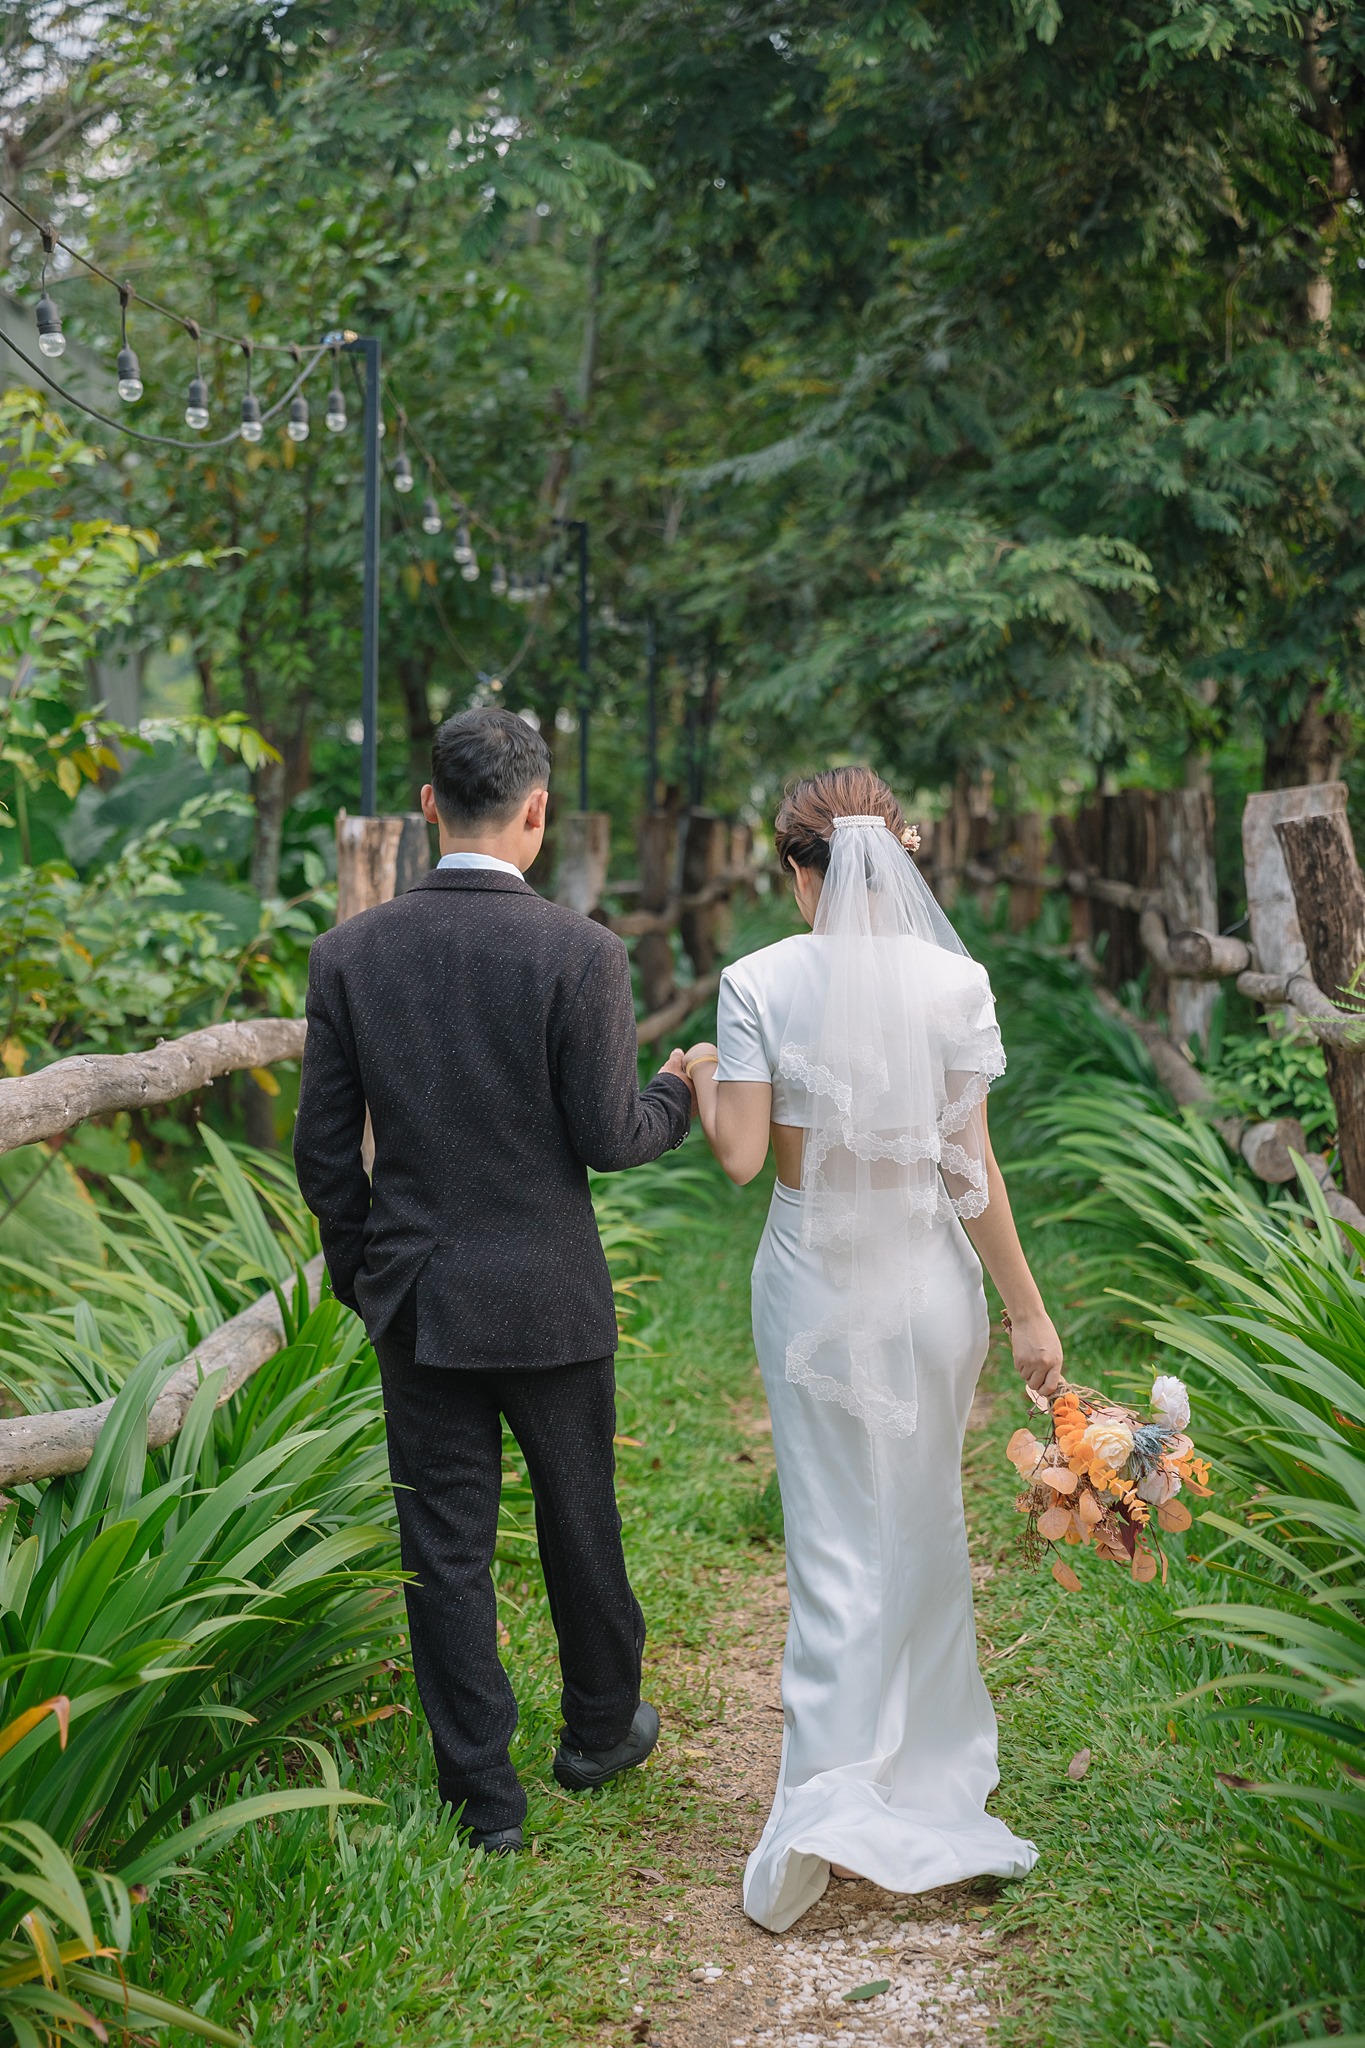 Son Studio - Photography Wedding - Buôn Ma Thuột﻿